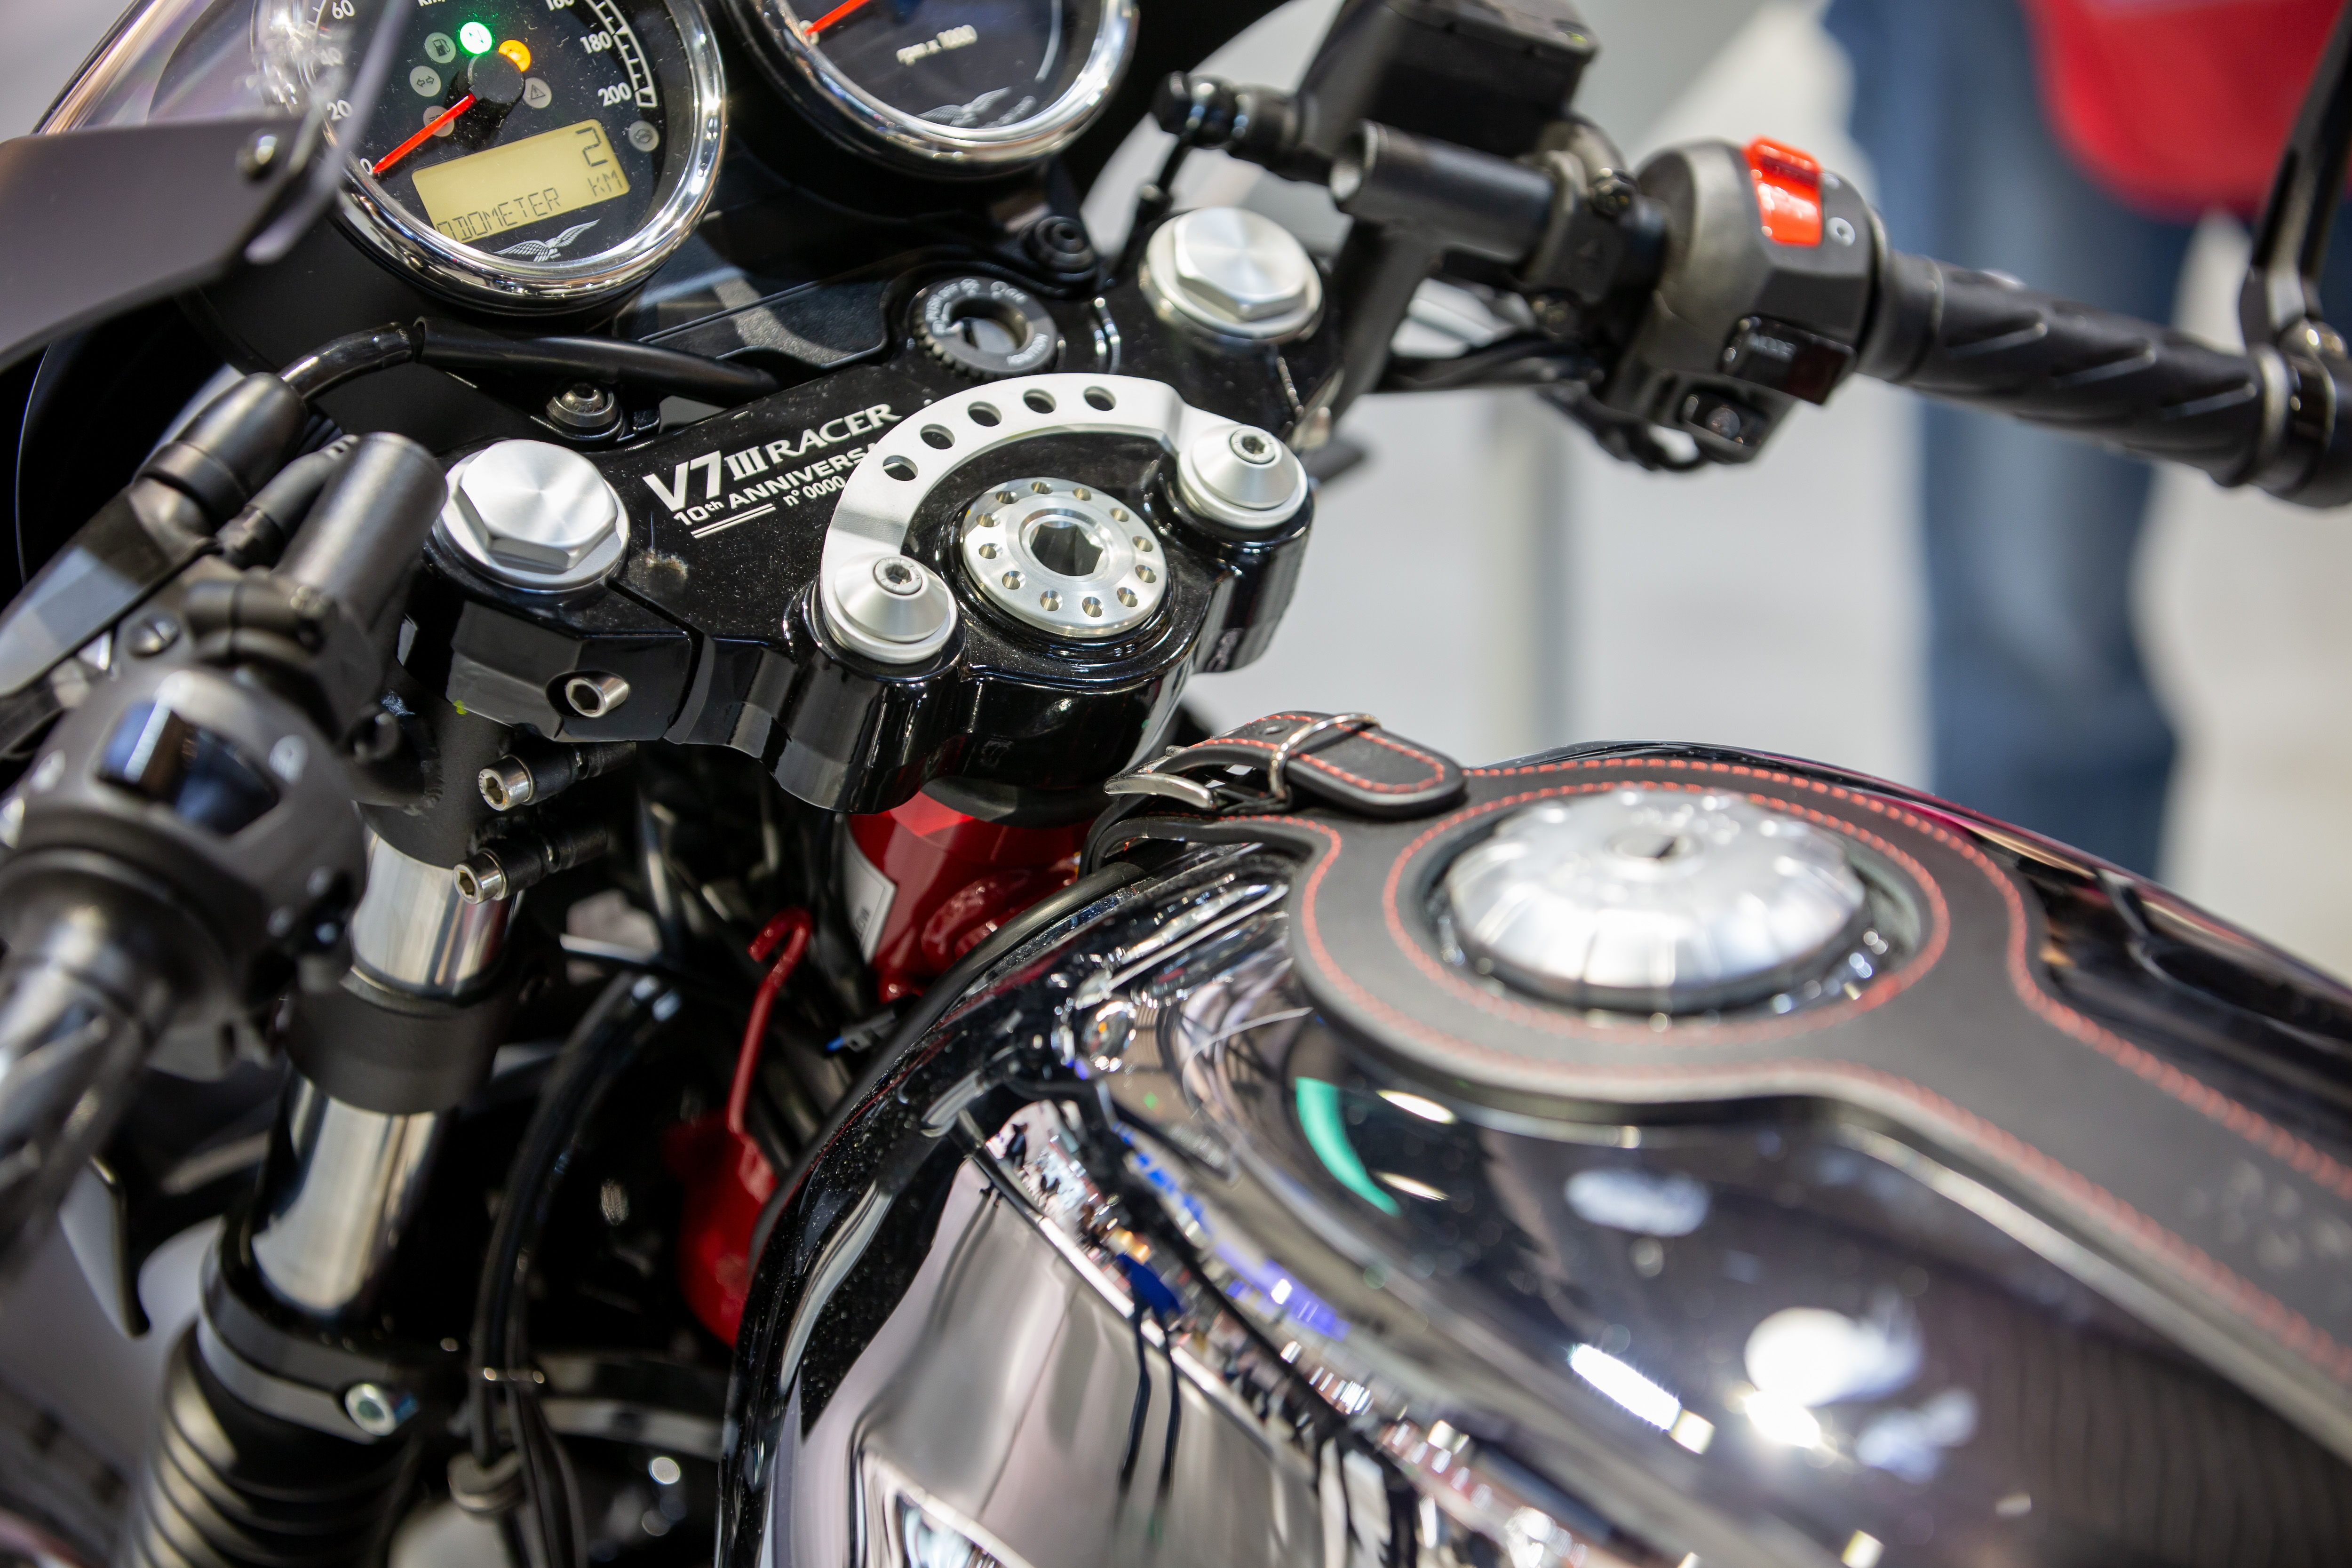 2020 Moto Guzzi V7 III Racer 10th Anniversary